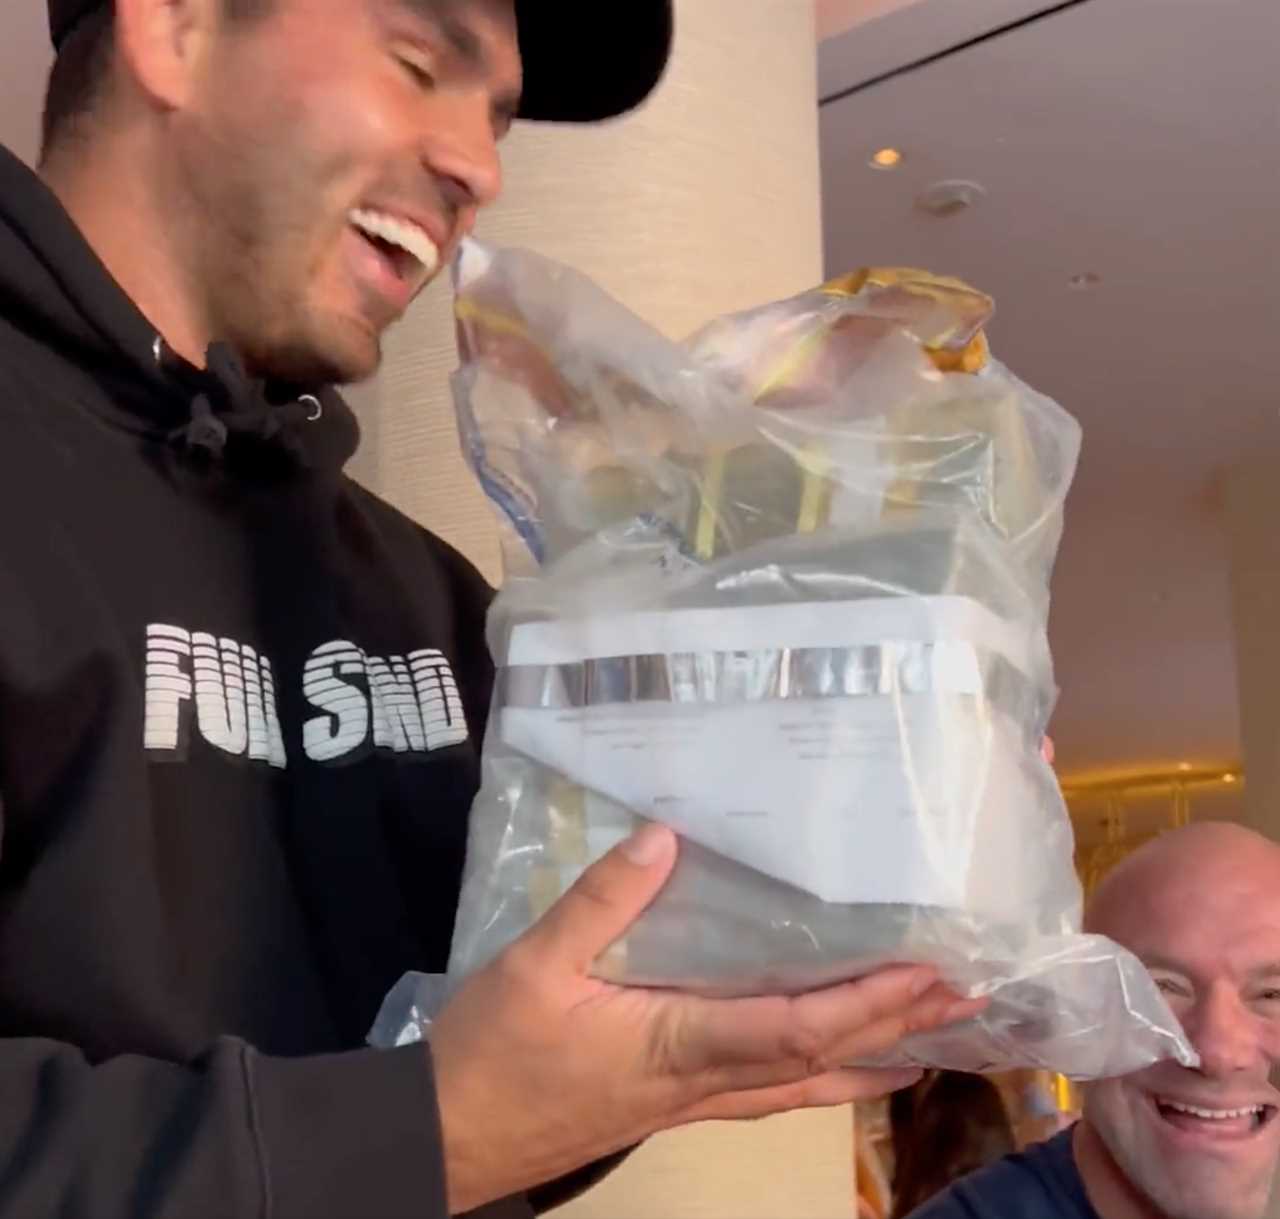 UFC boss Dana White presents Kyle from Nelk Boy $250,000 cash as a birthday present.